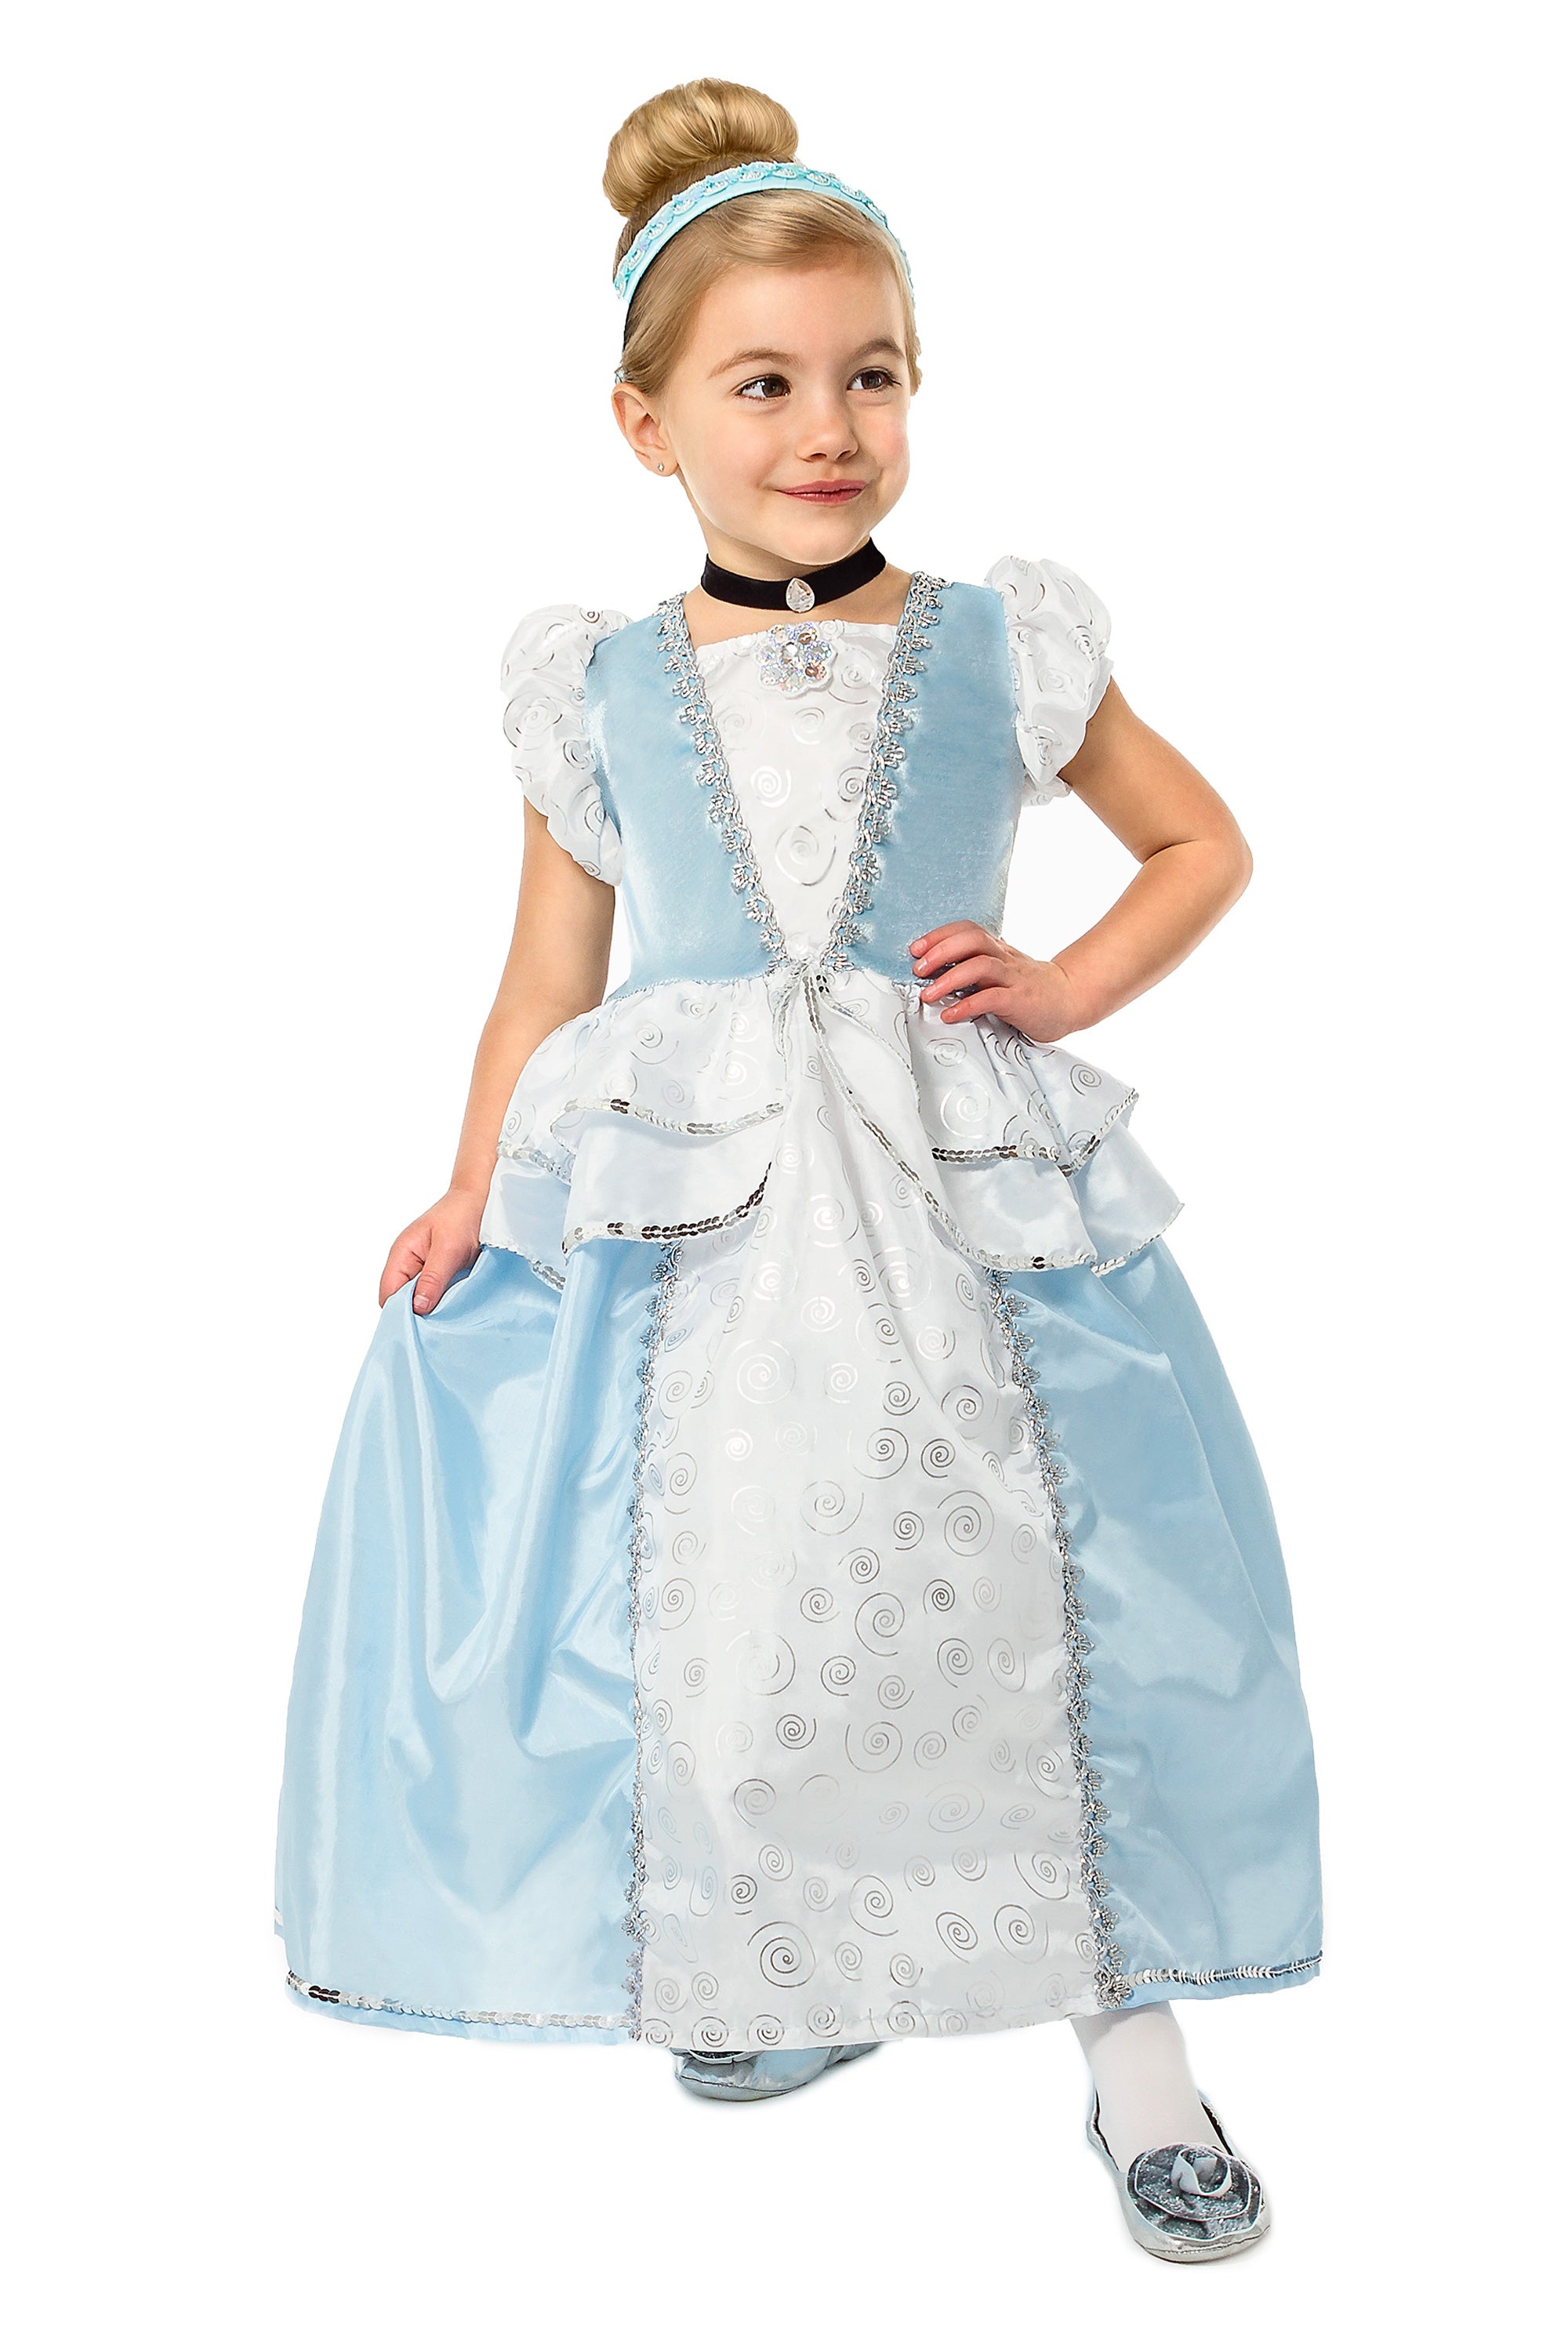 cinderella dresses for toddlers